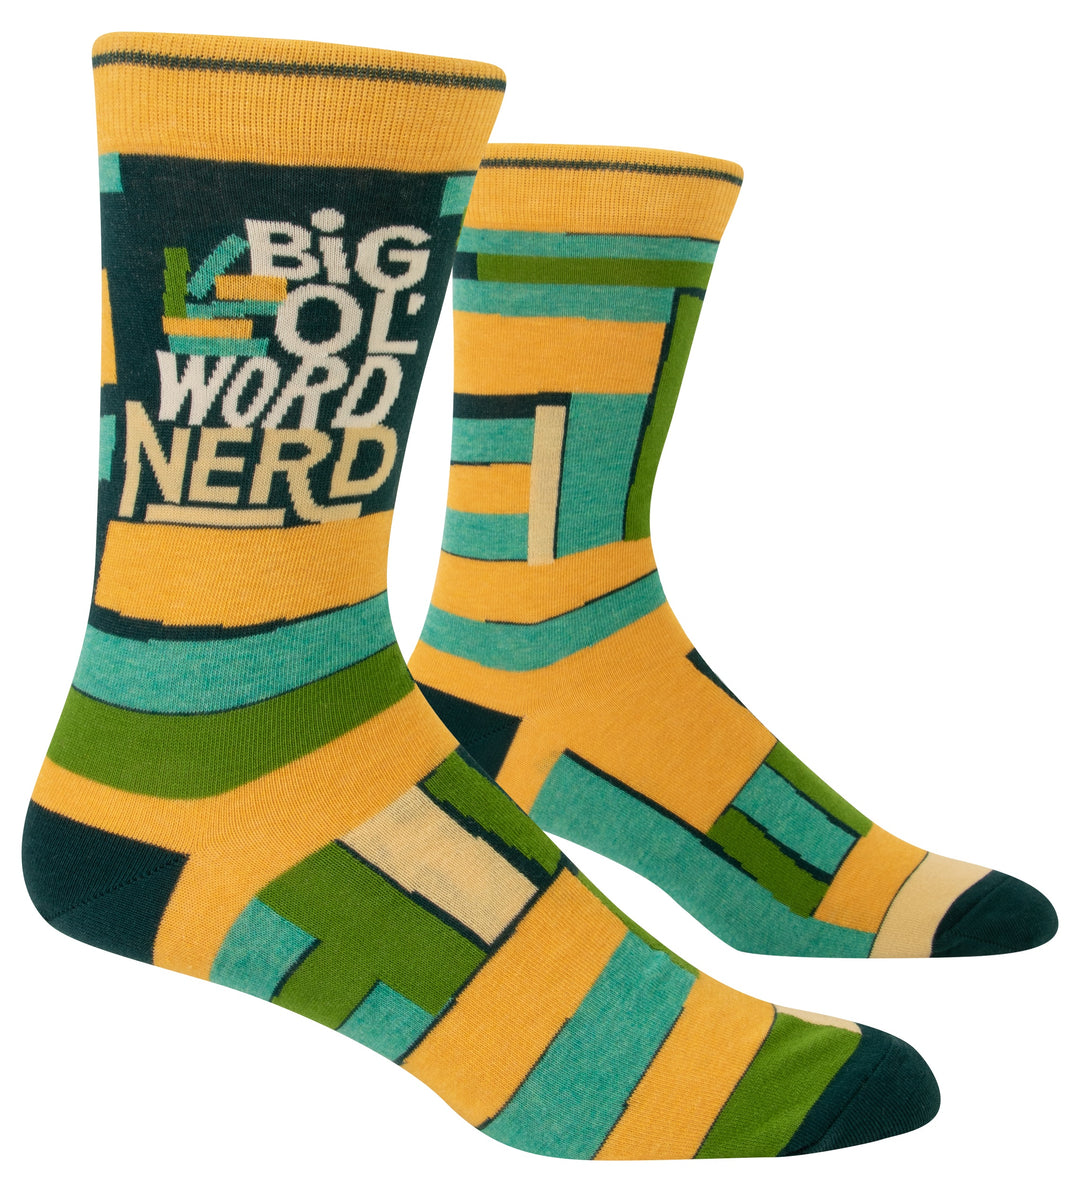 BlueQ - Men's Socks - Big 'Ol World Nerd | Buster McGee